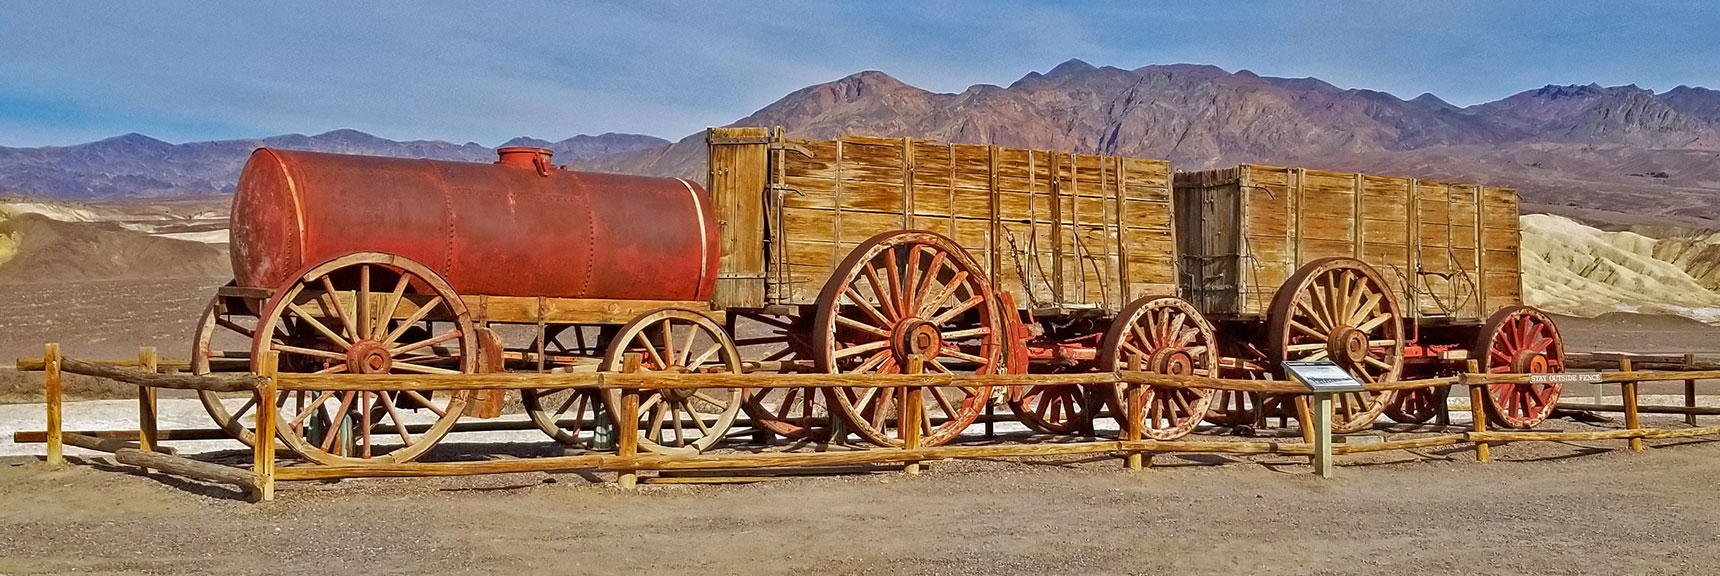 Original 20 Mule Team Wagons on Display at Harmony Borax Works. | Twenty Mule Team Canyon | Death Valley National Park, California